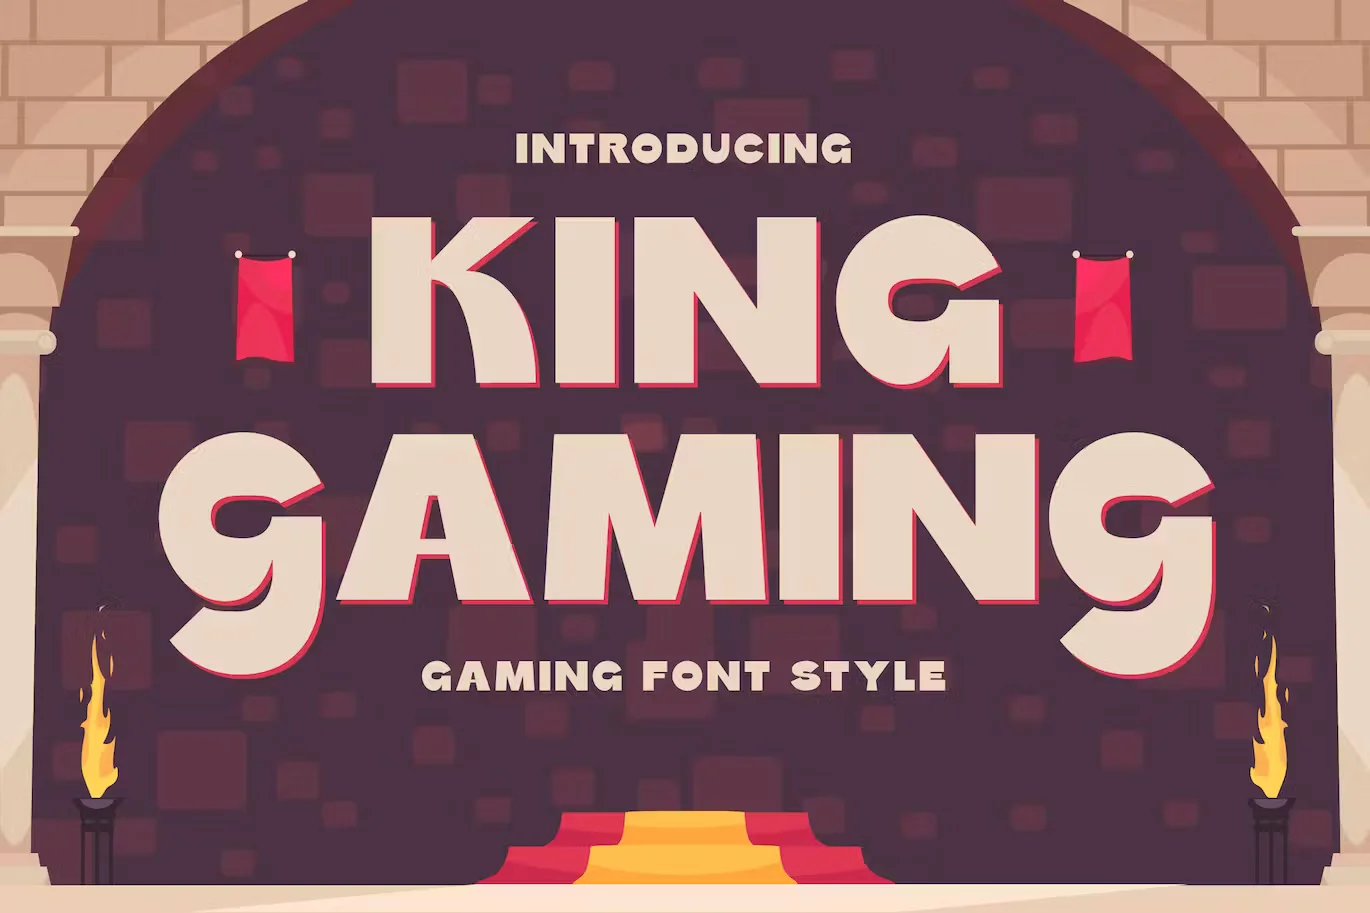 King Gaming - Gaming Font Style